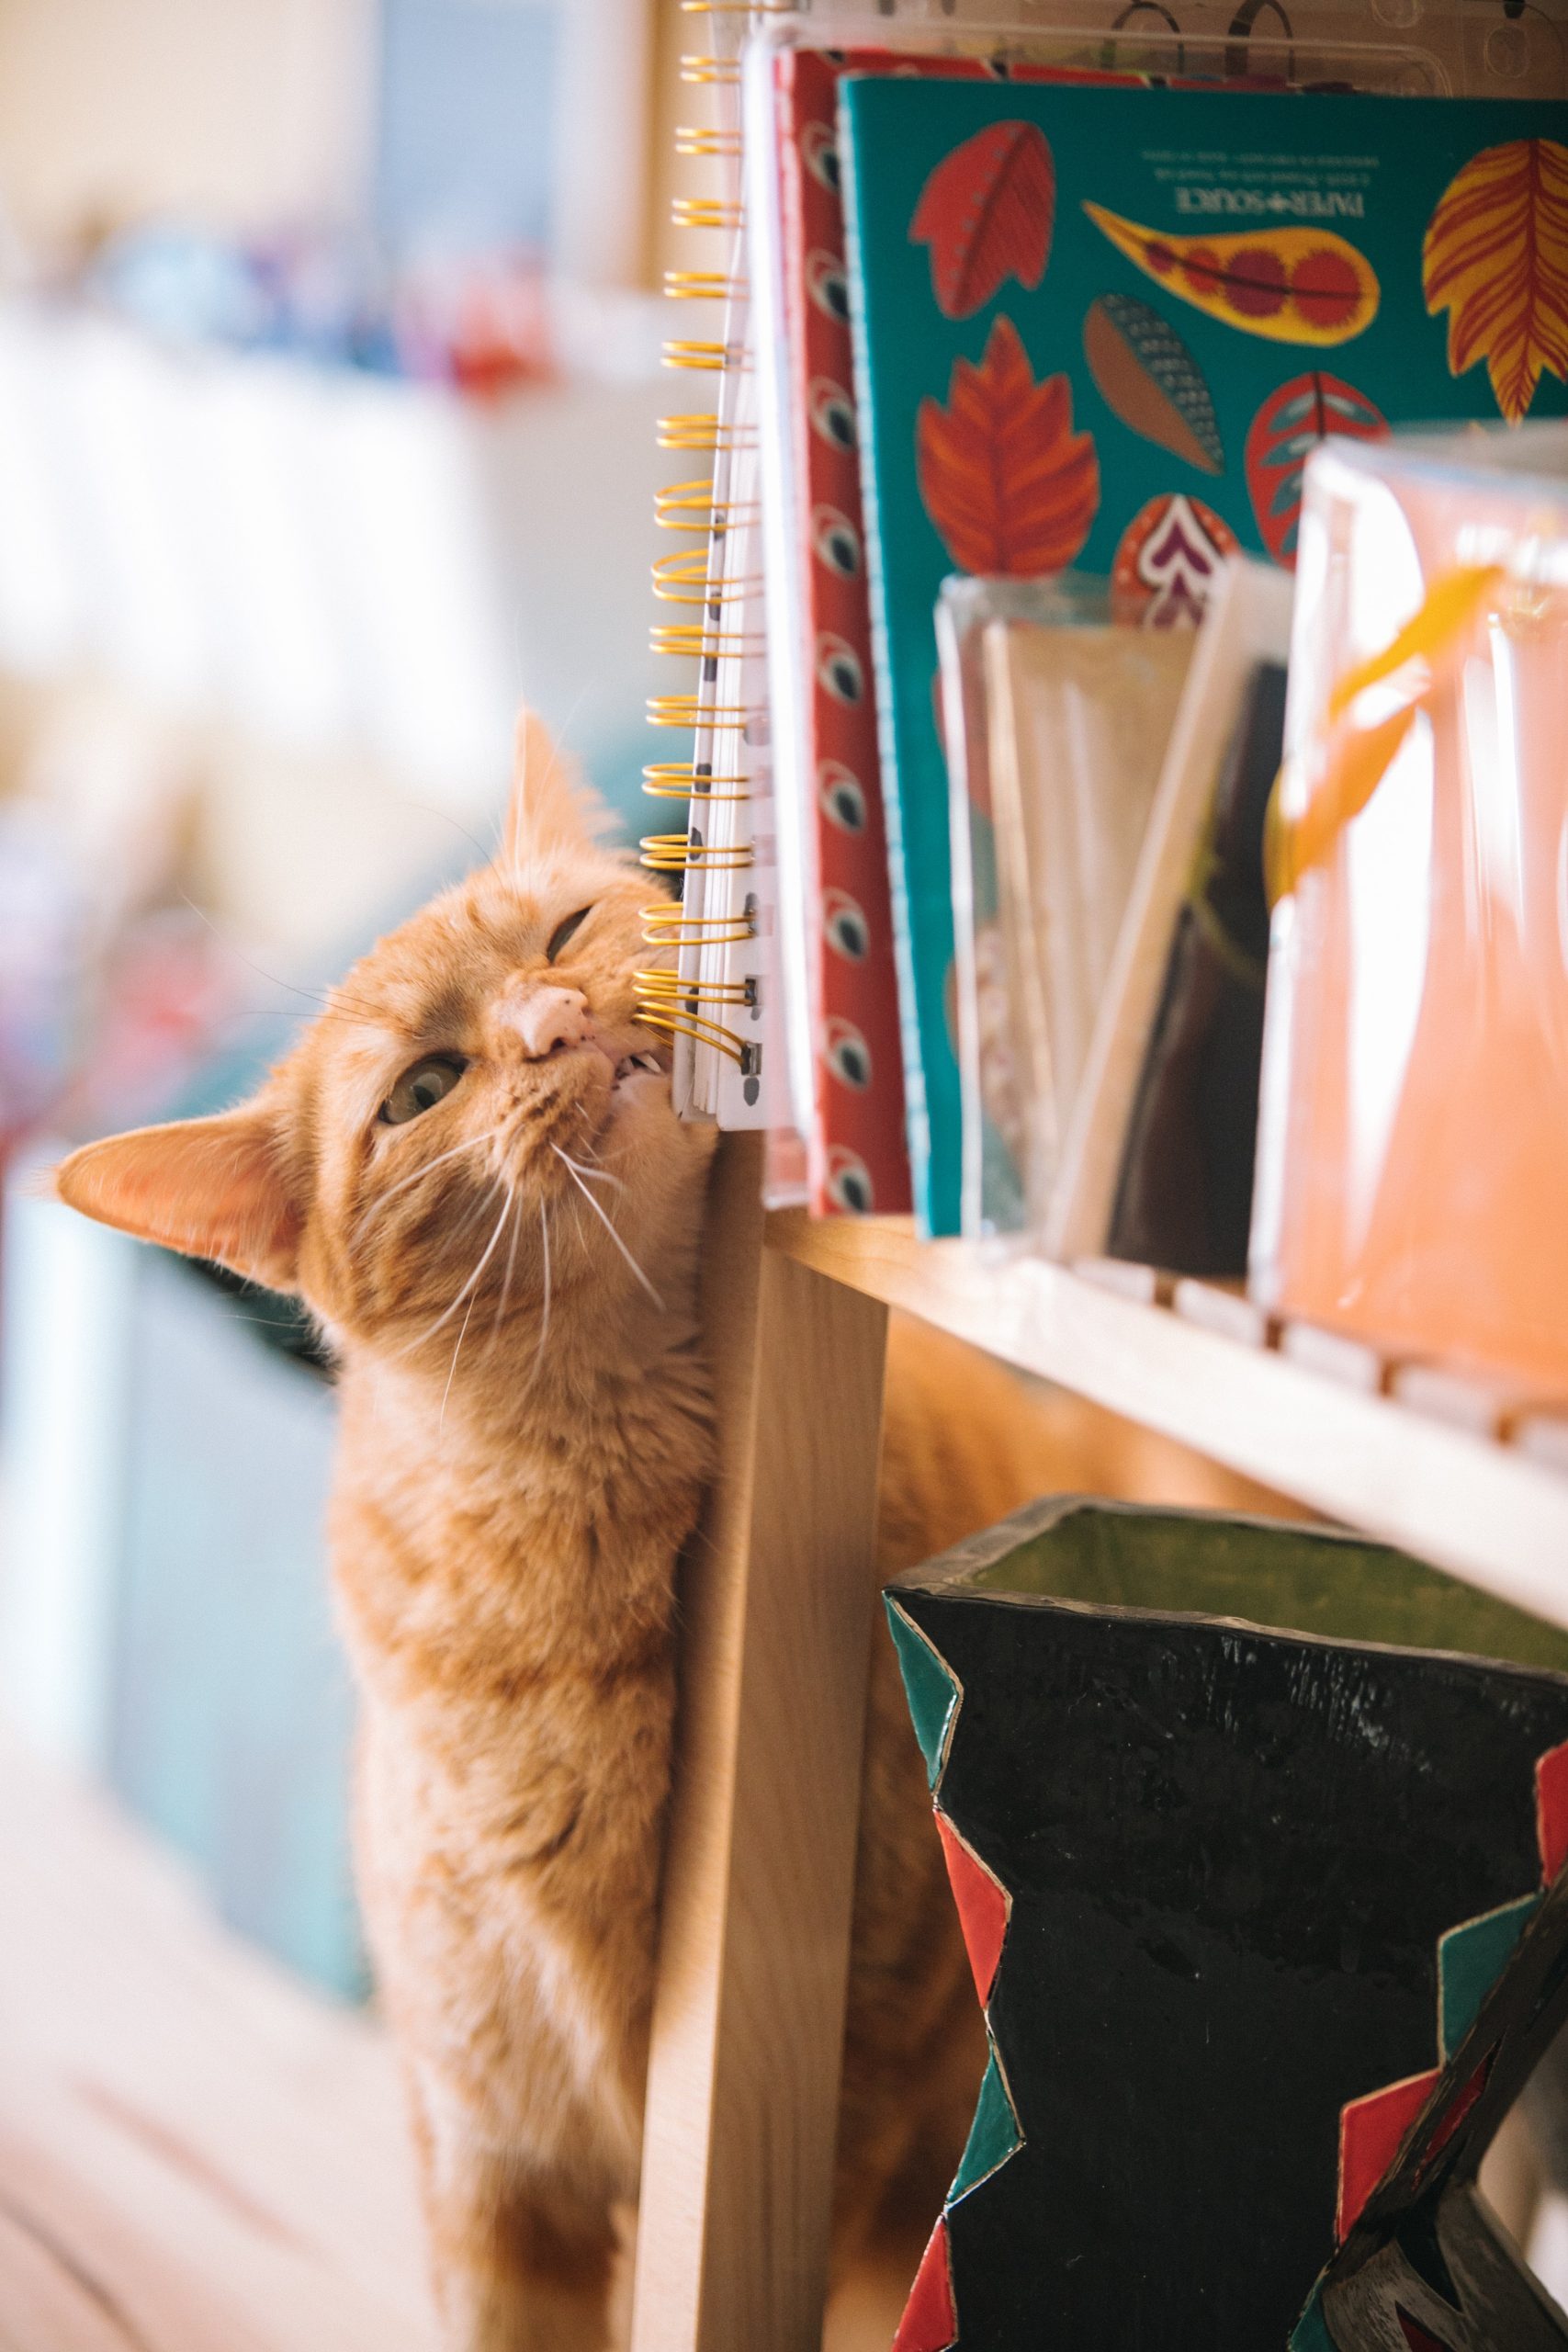 Orange tabby cat rubbing his face on a book shelf.